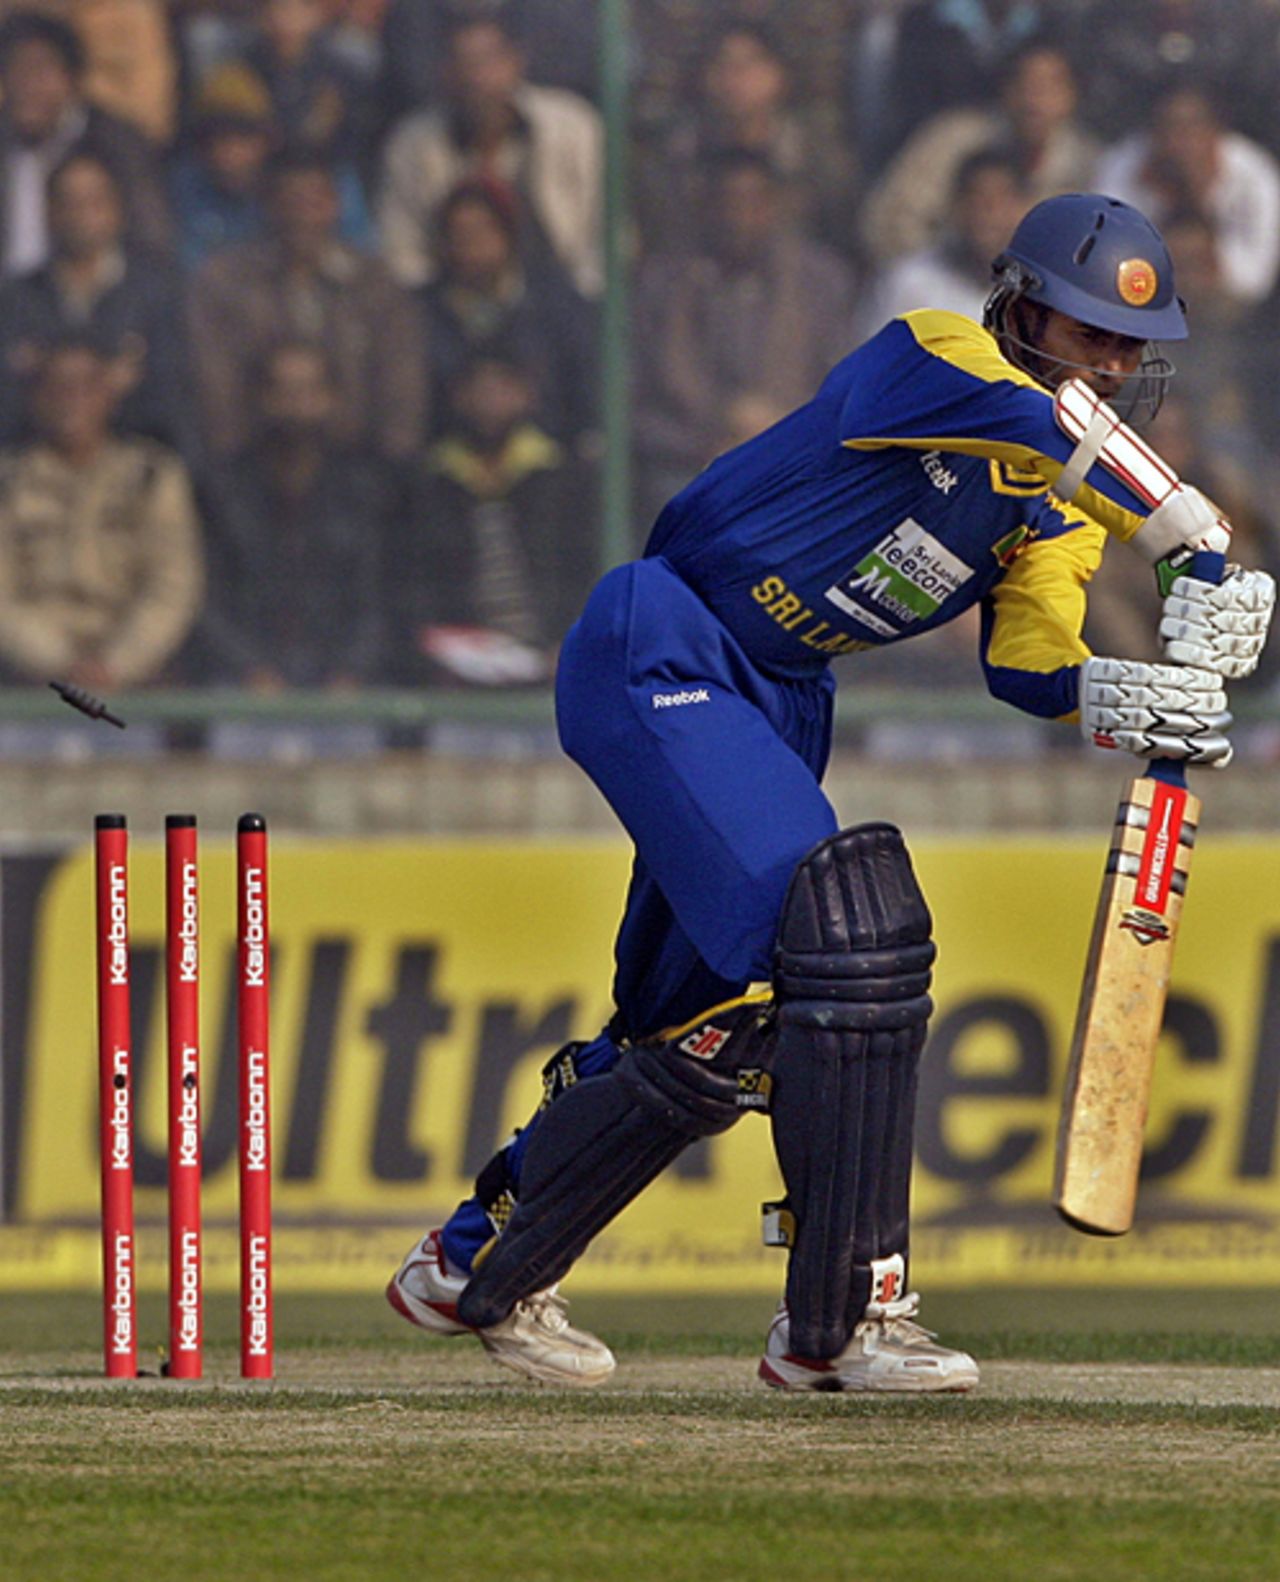 Upul Tharanga was cleaned up first ball, India v Sri Lanka, 5th ODI, December 27, 2009